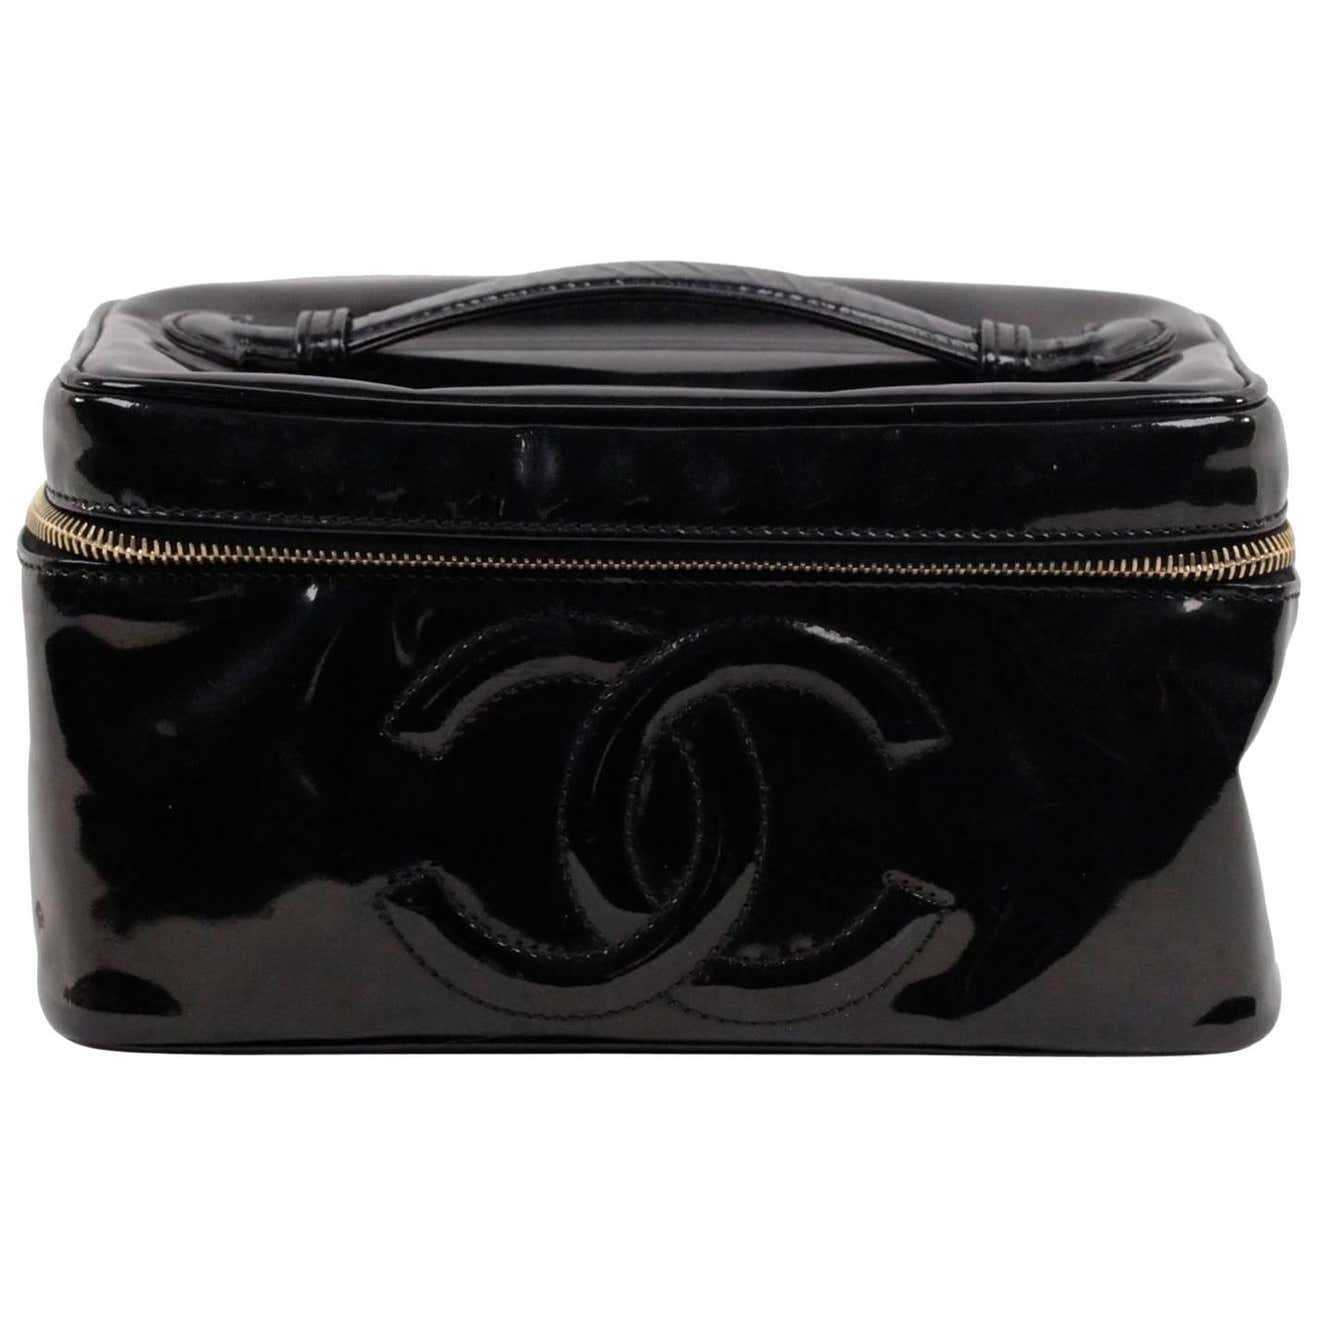 CHANEL Black Patent Leather COSMETIC BAG Vanity Case HANDBAG Purse at ...